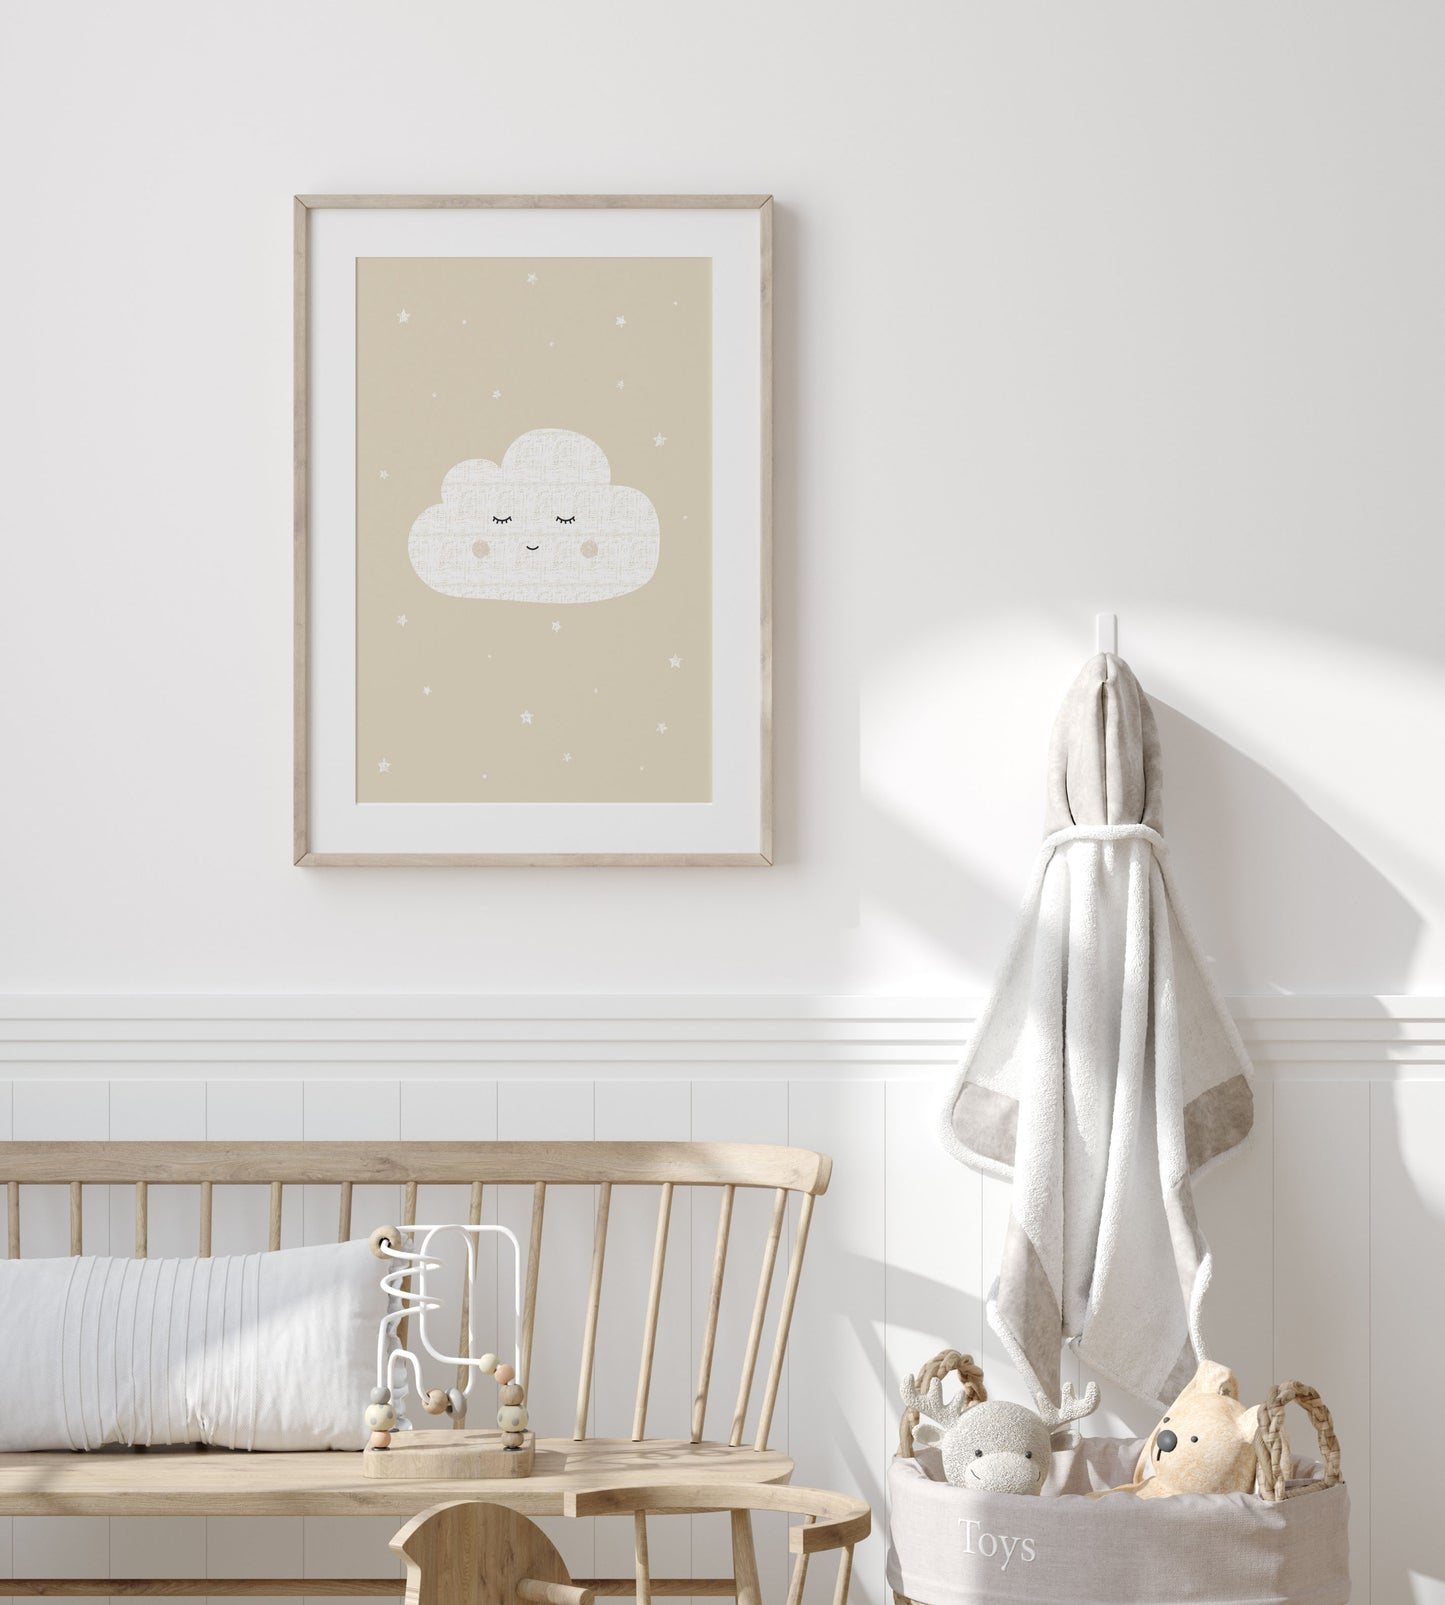 Cloud wall art print for neutral kids room or nursery